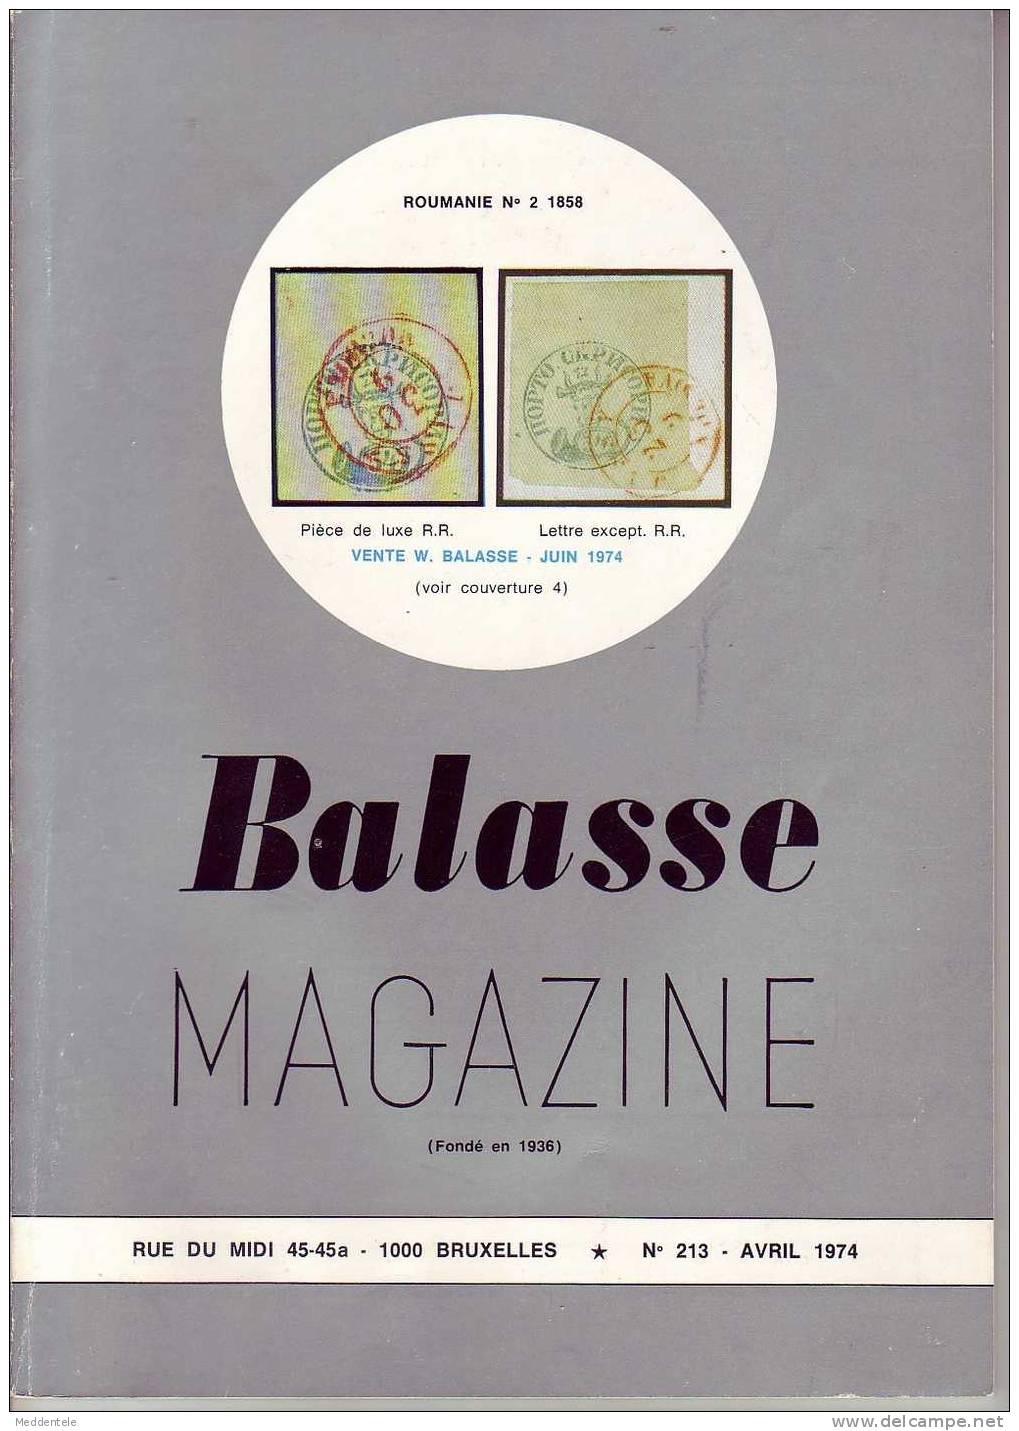 BALASSE MAGAZINE N° 213 - French (from 1941)